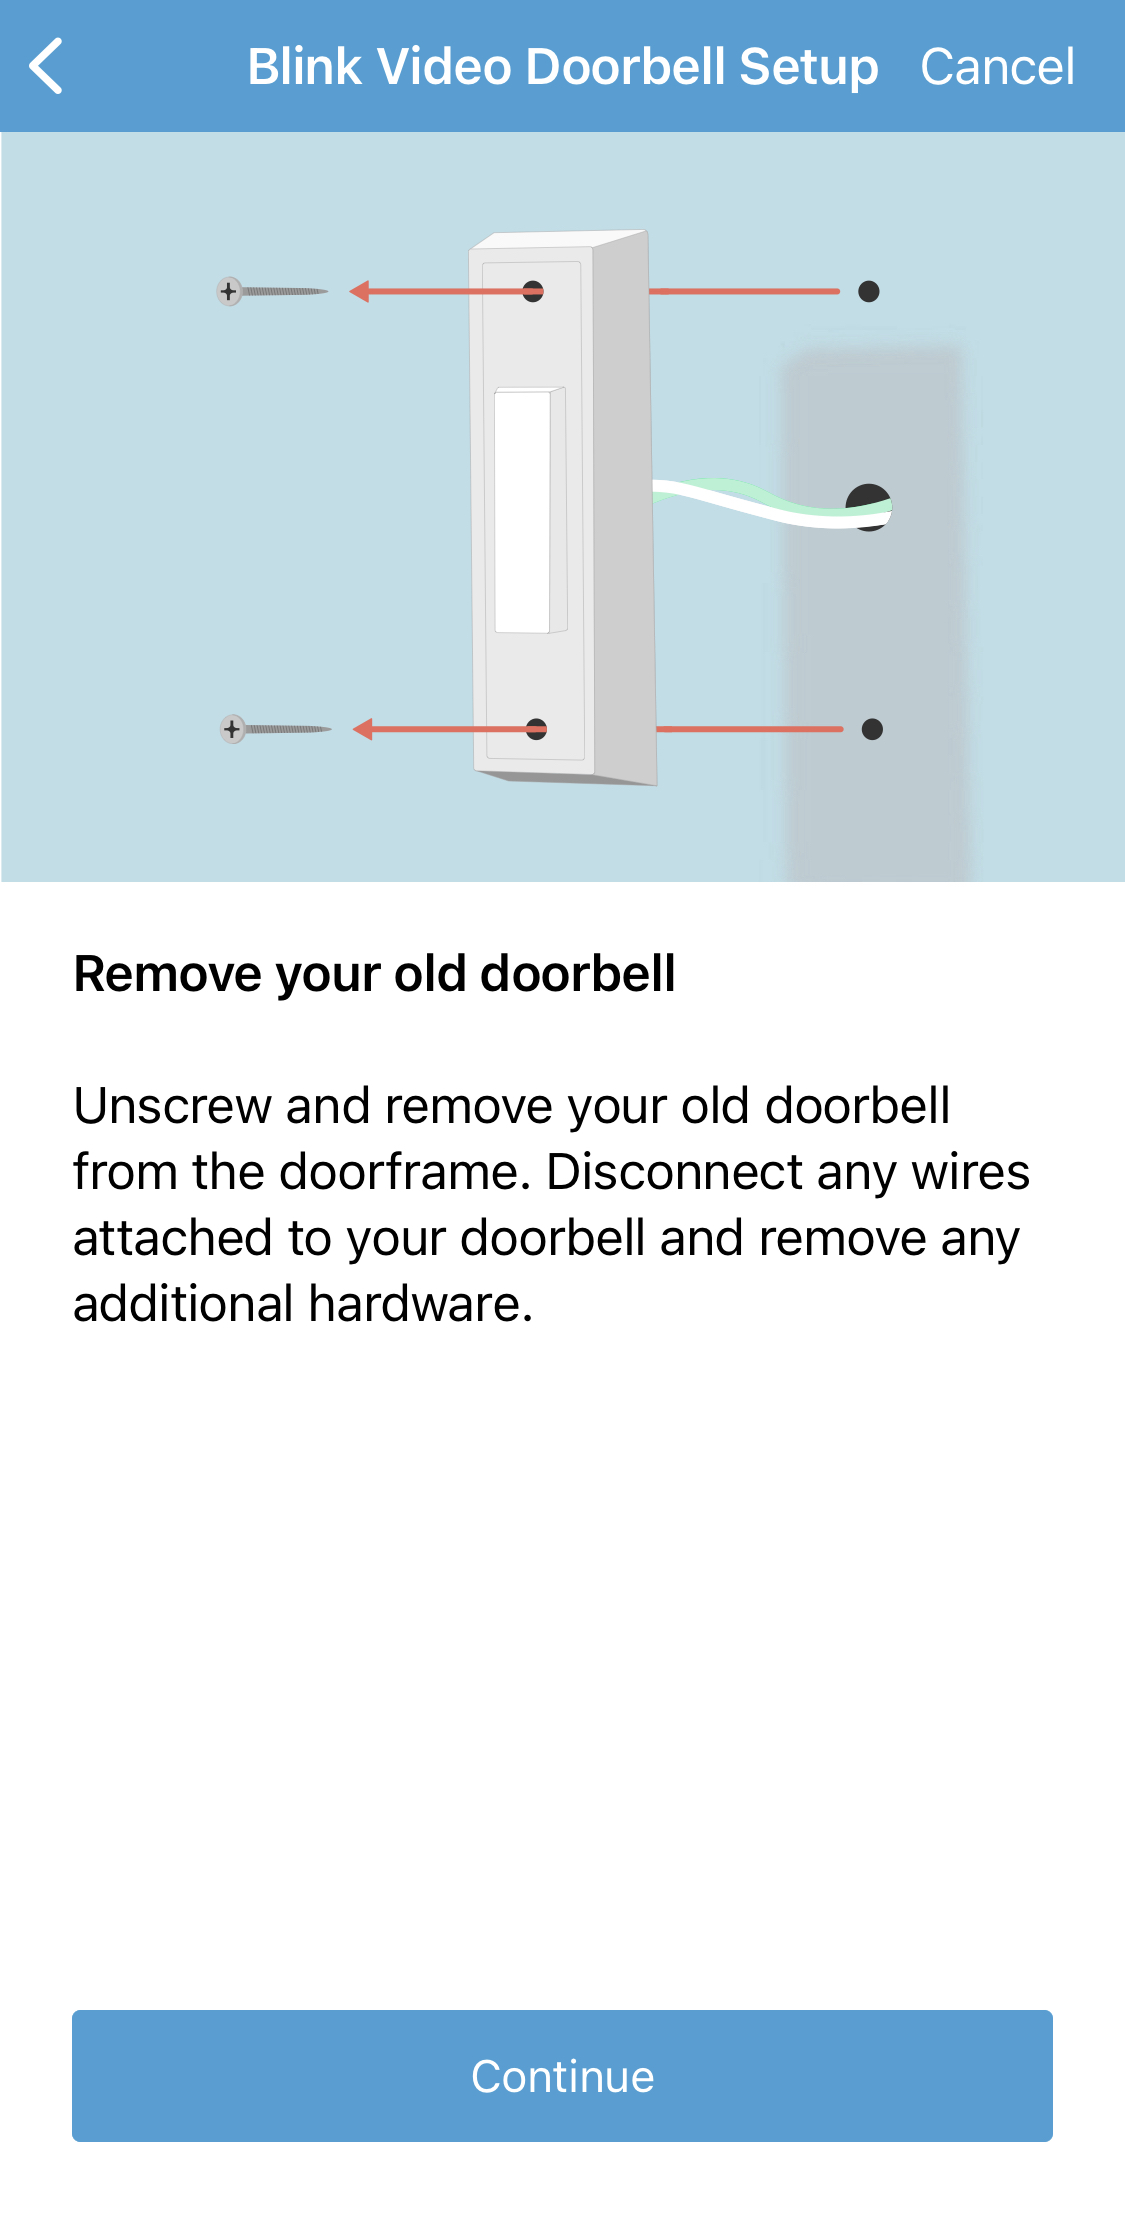 remove old doorbell image